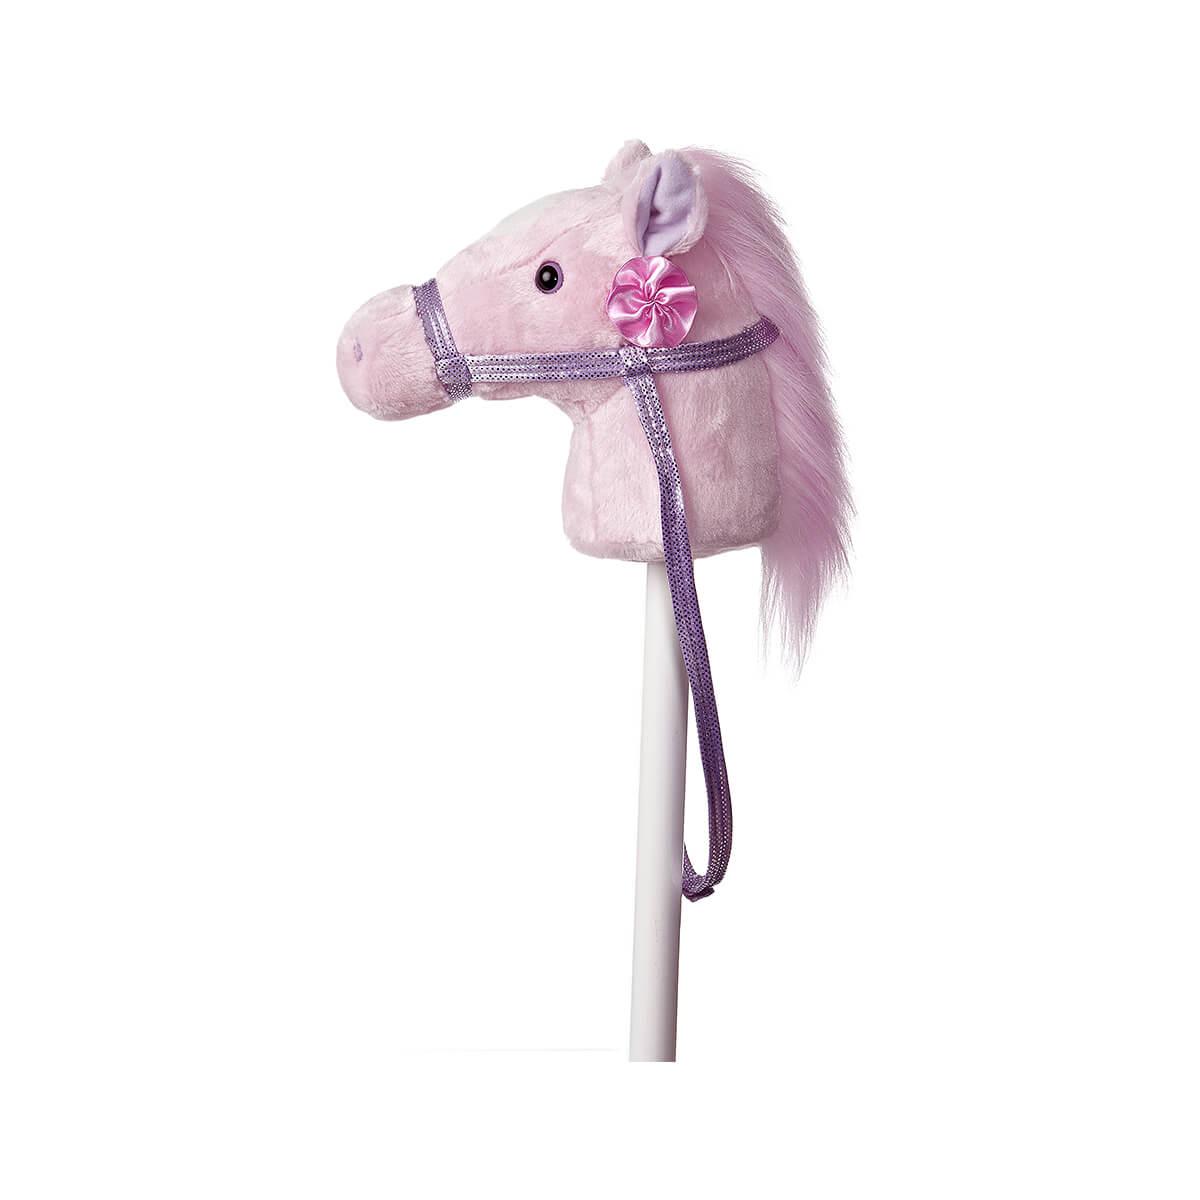  Giddy Up Friends Stick Animal Toy - Fantasy Pink Pony